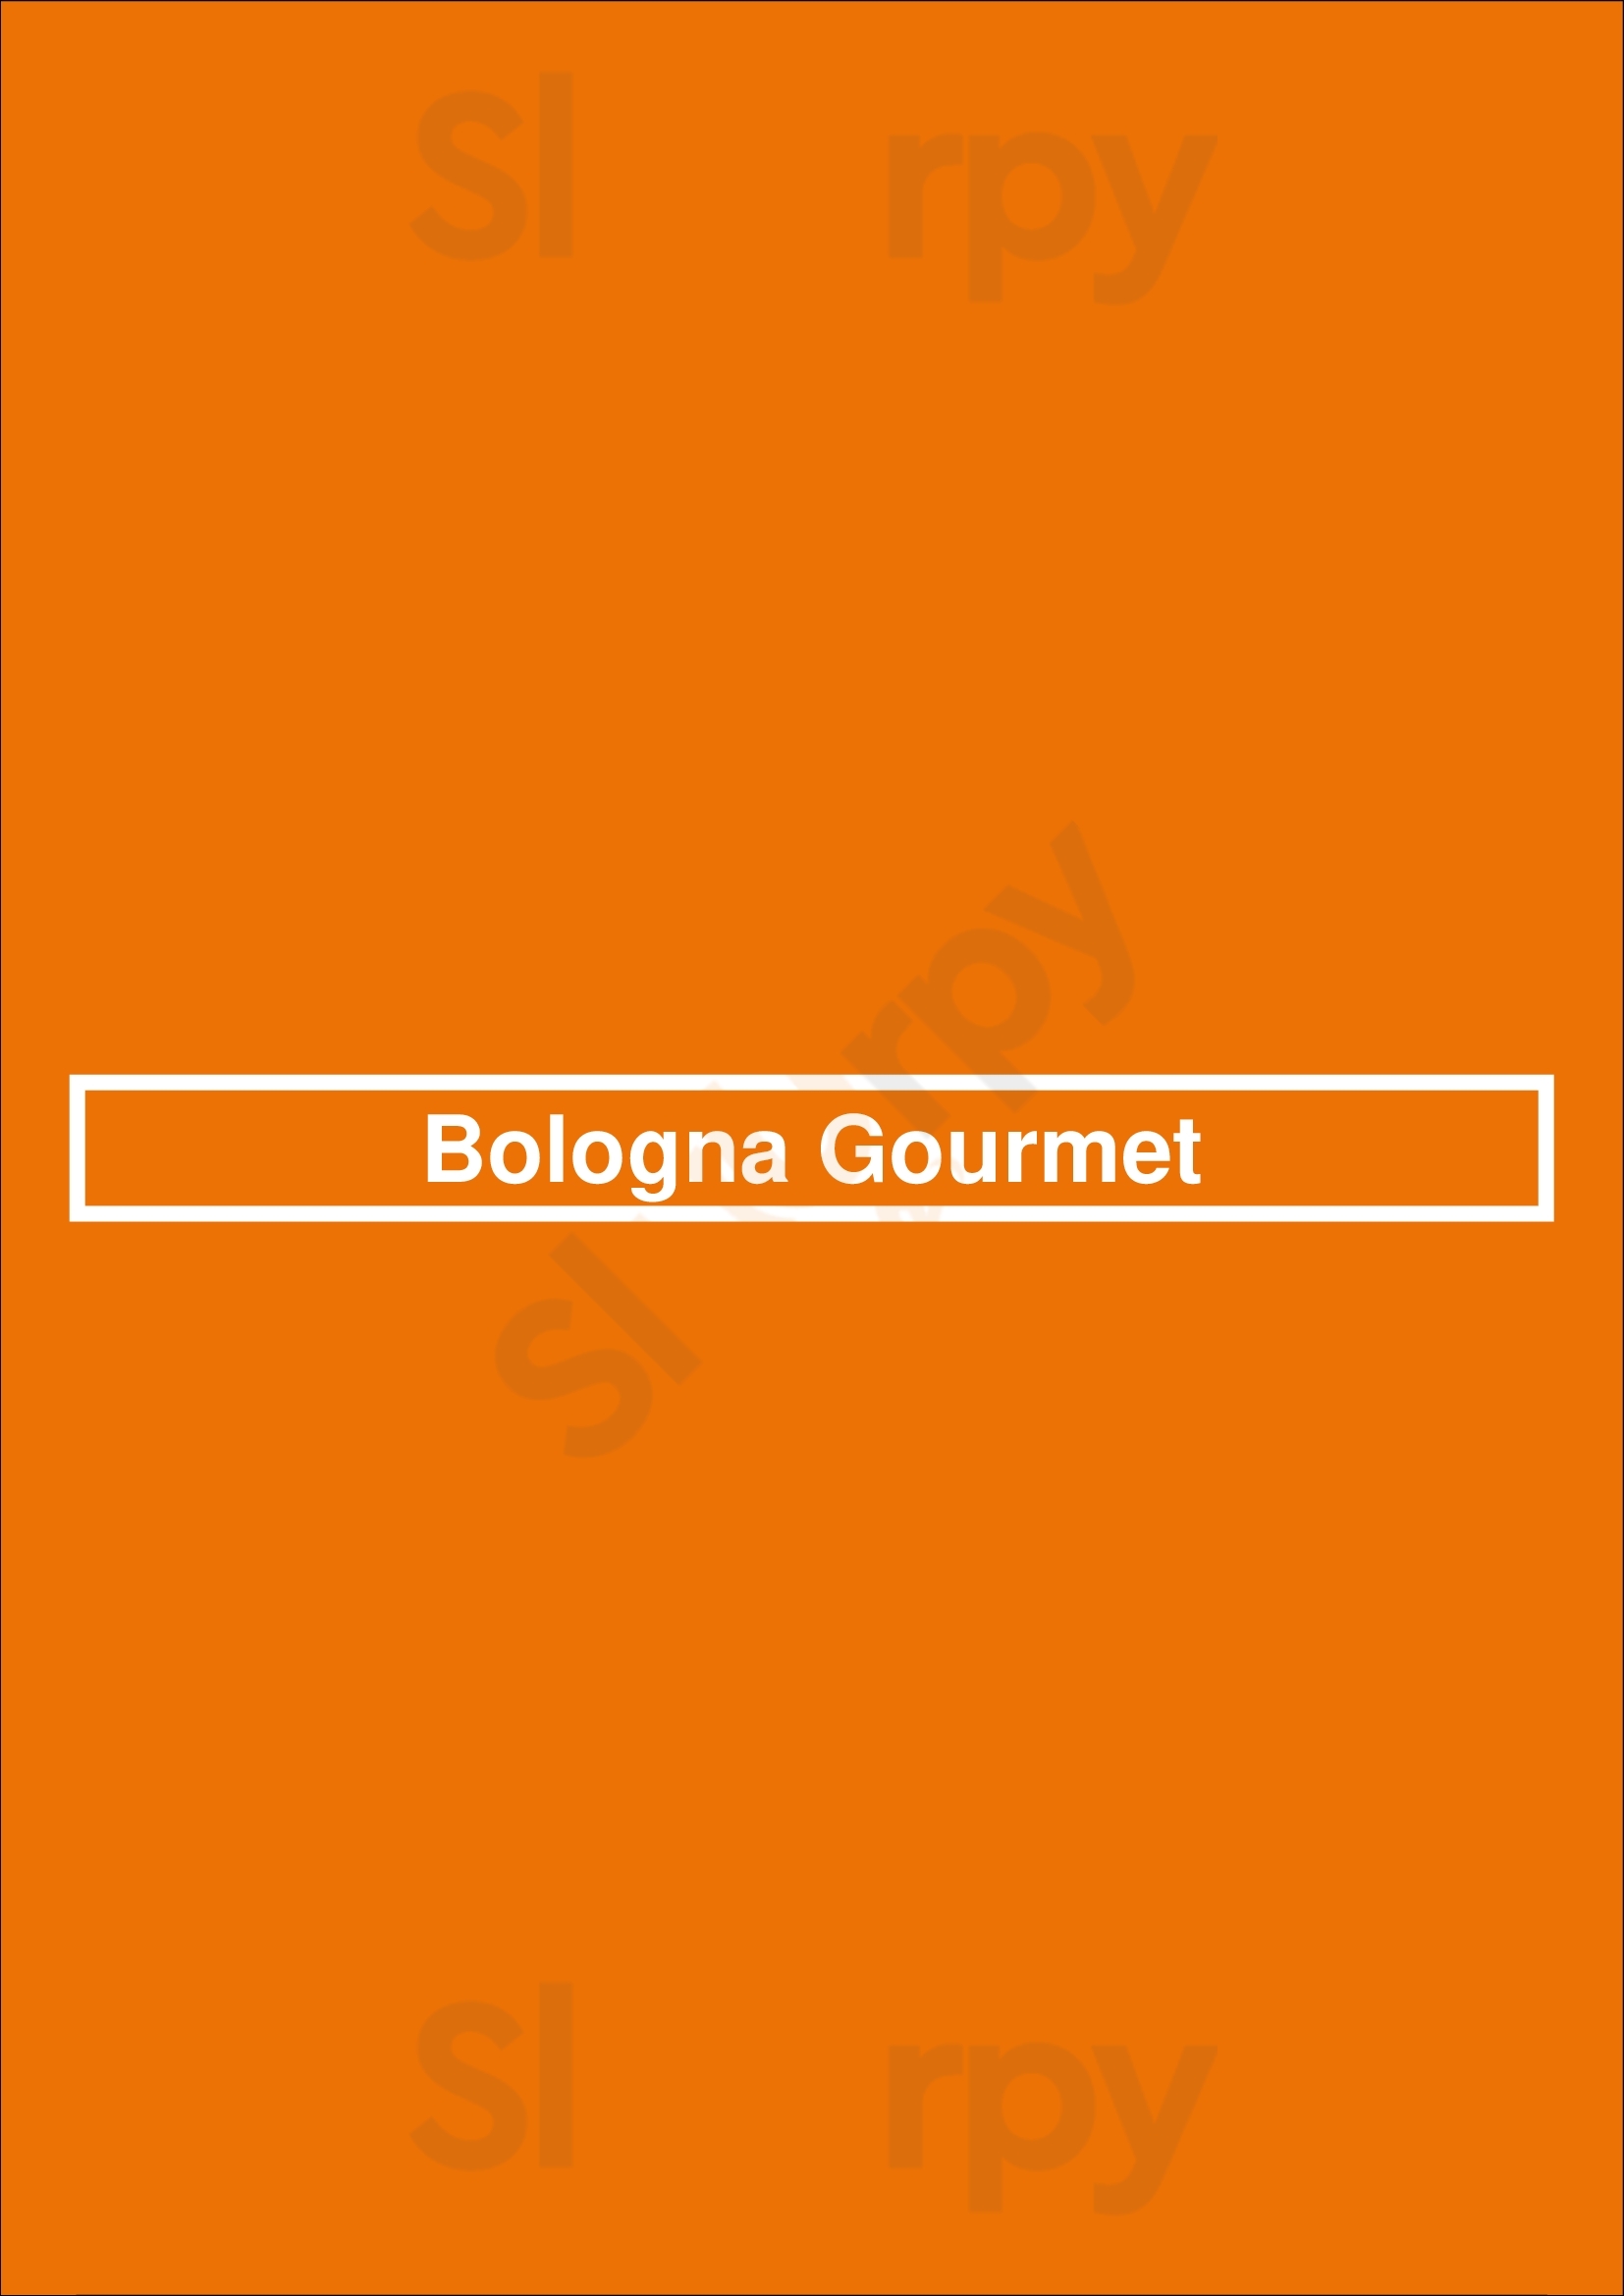 Bologna Gourmet Carlsbad Menu - 1